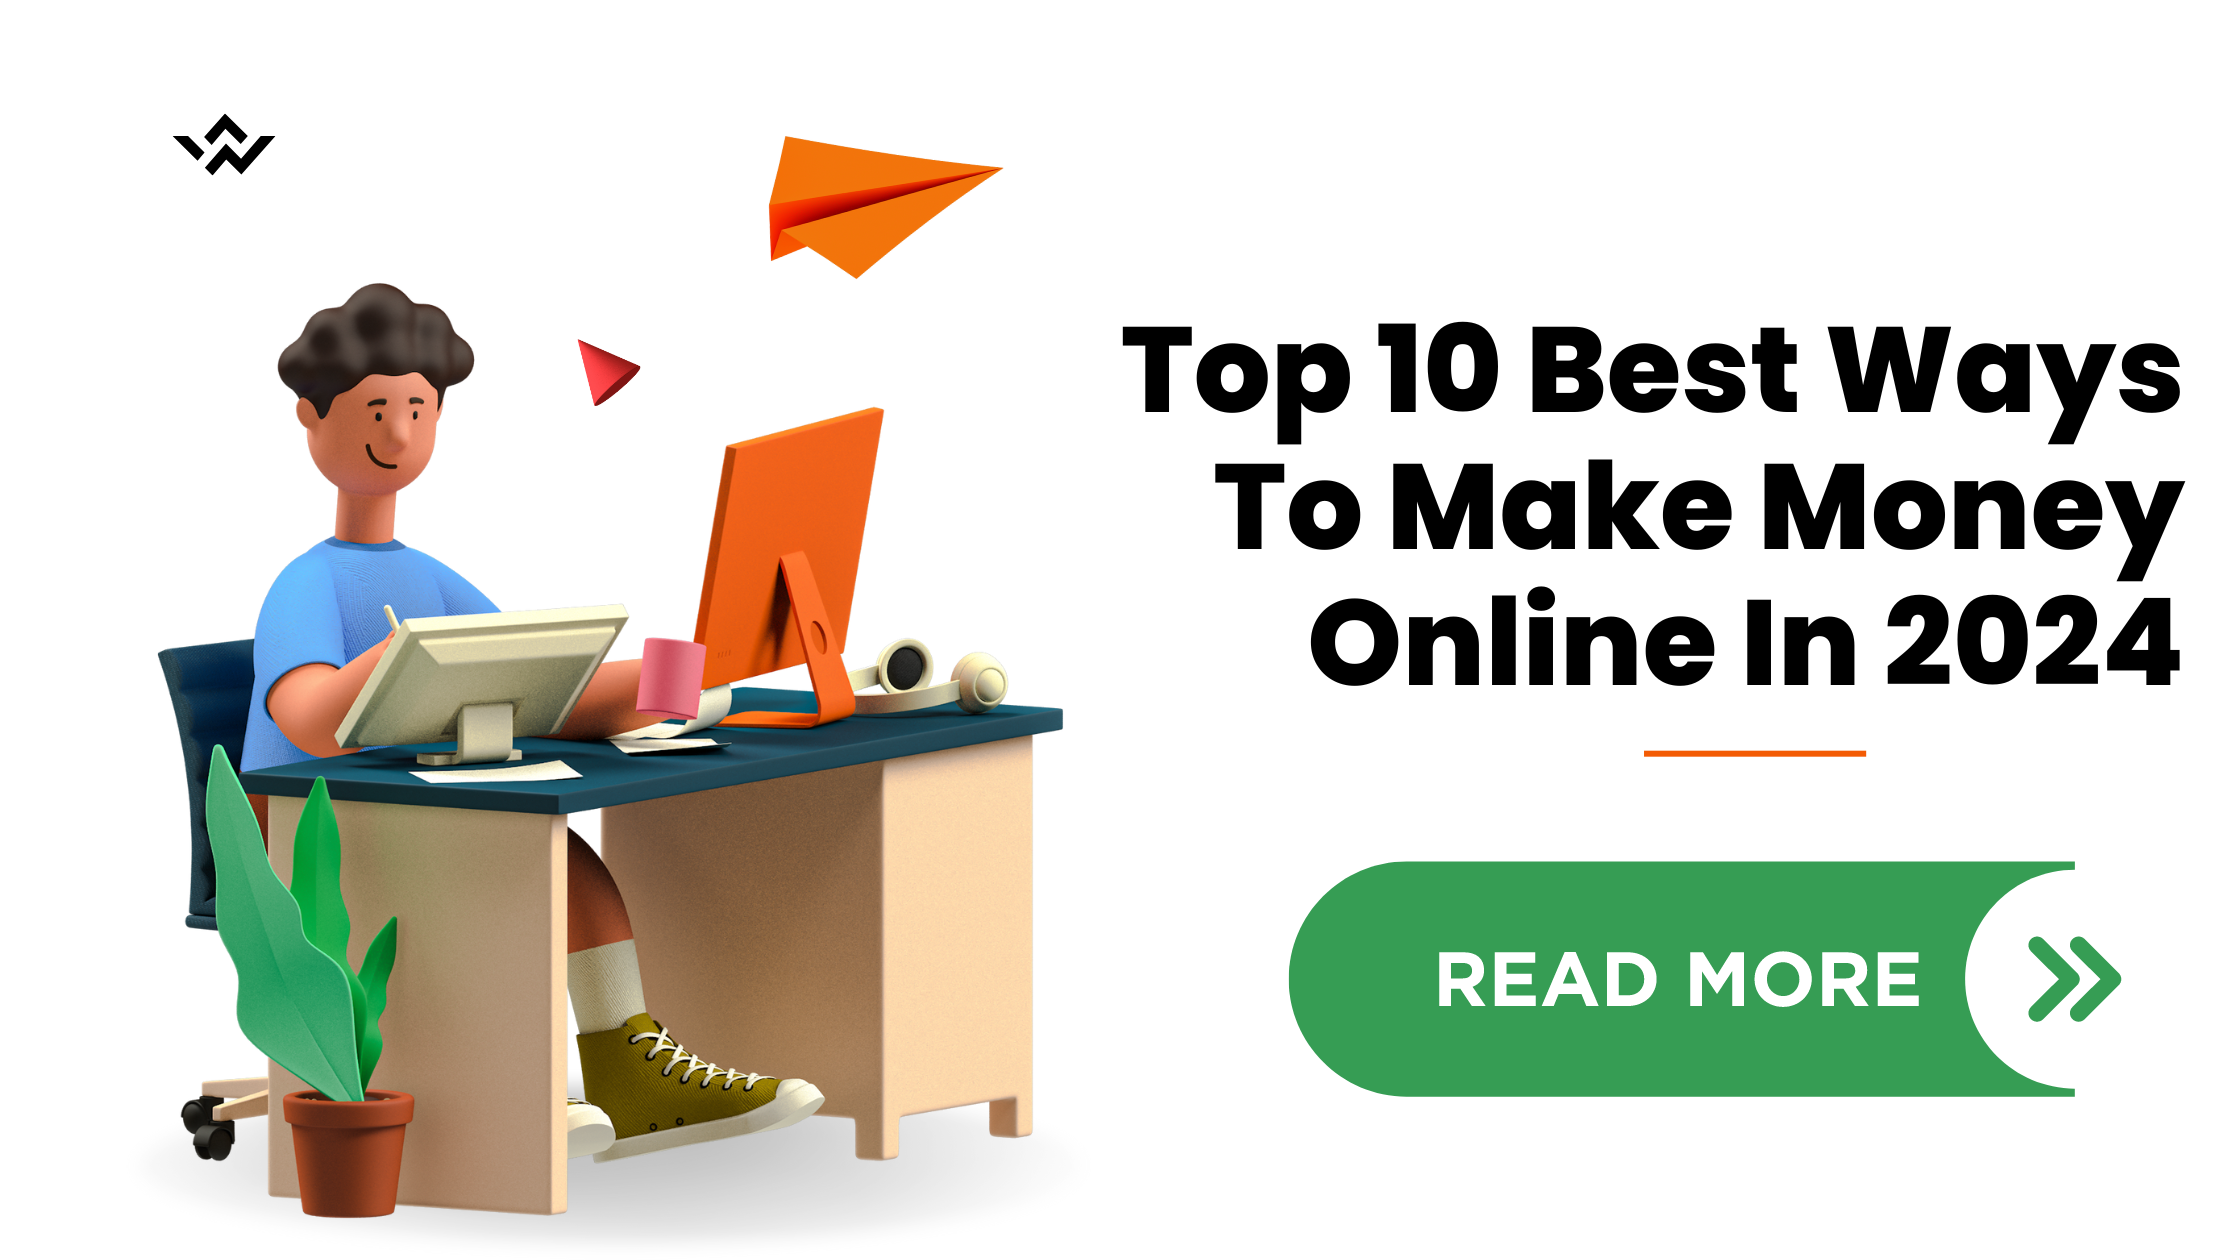 Top 10 Best Ways To Make Money Online In 2024